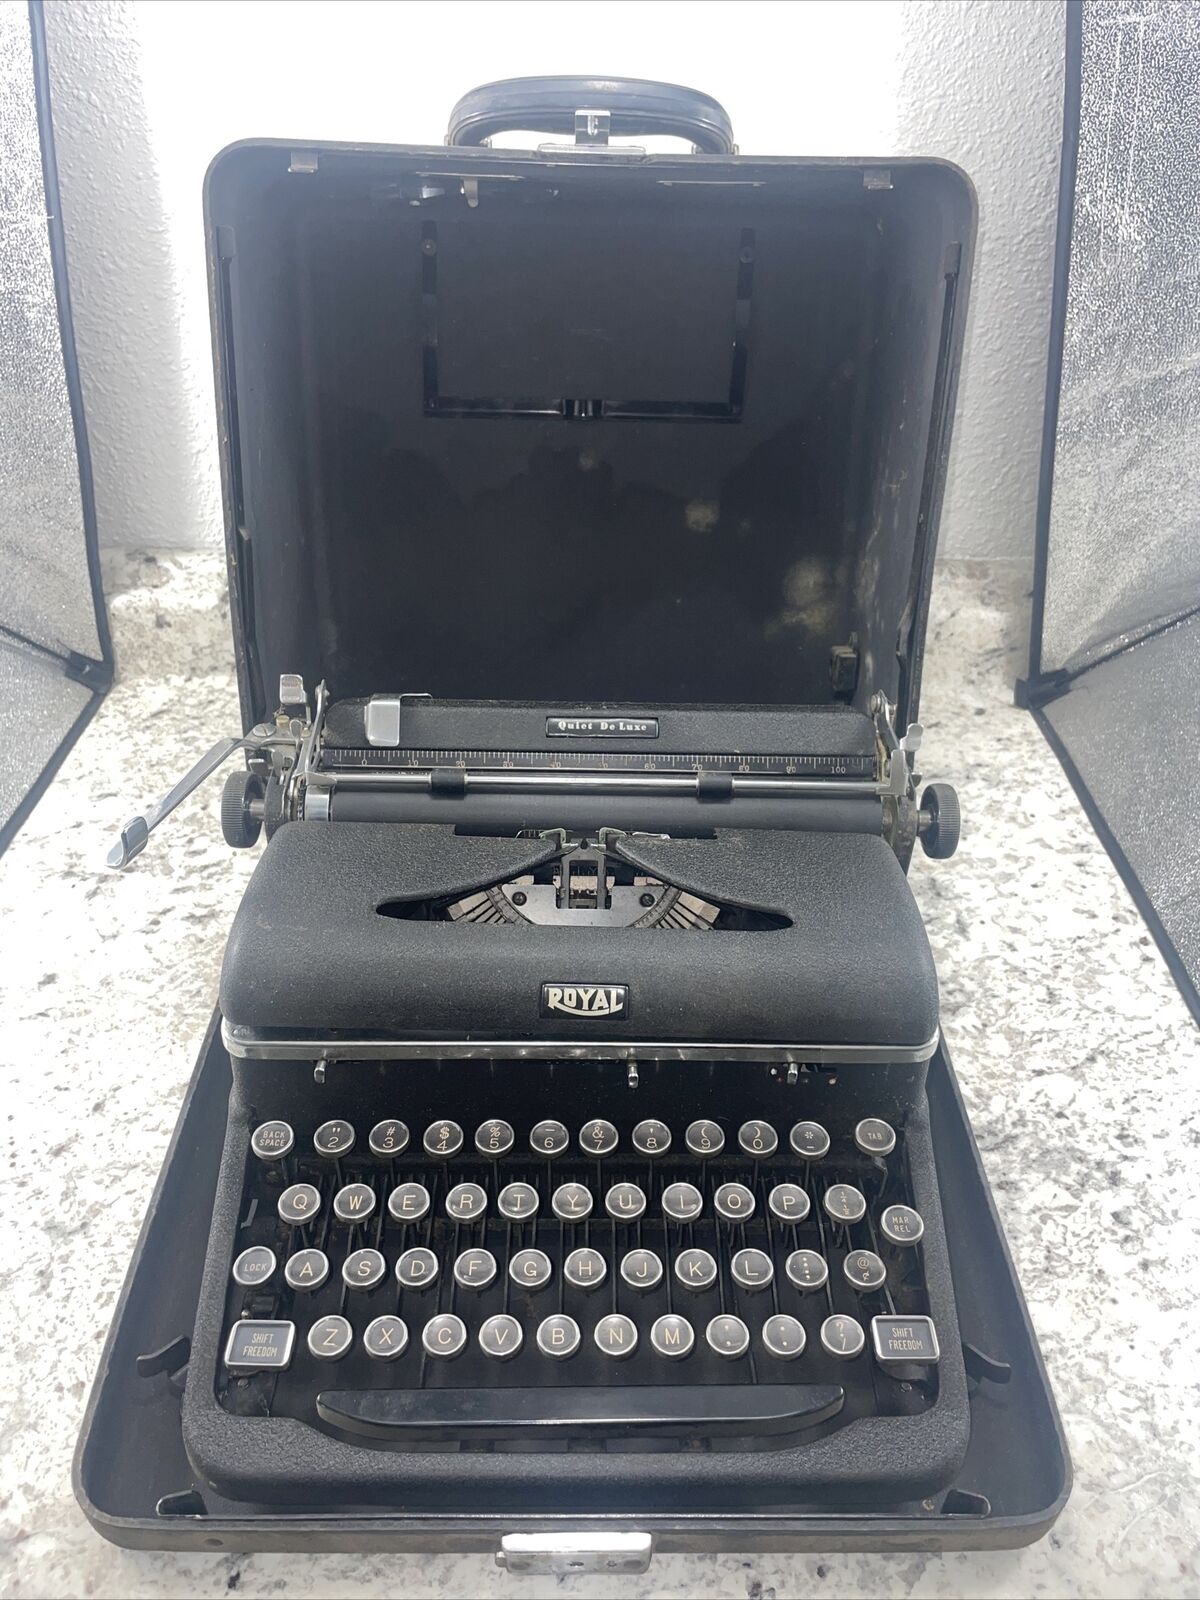 VTG Royal Quiet De Luxe Portable Typewriter w/ Storage Case - Good Condition